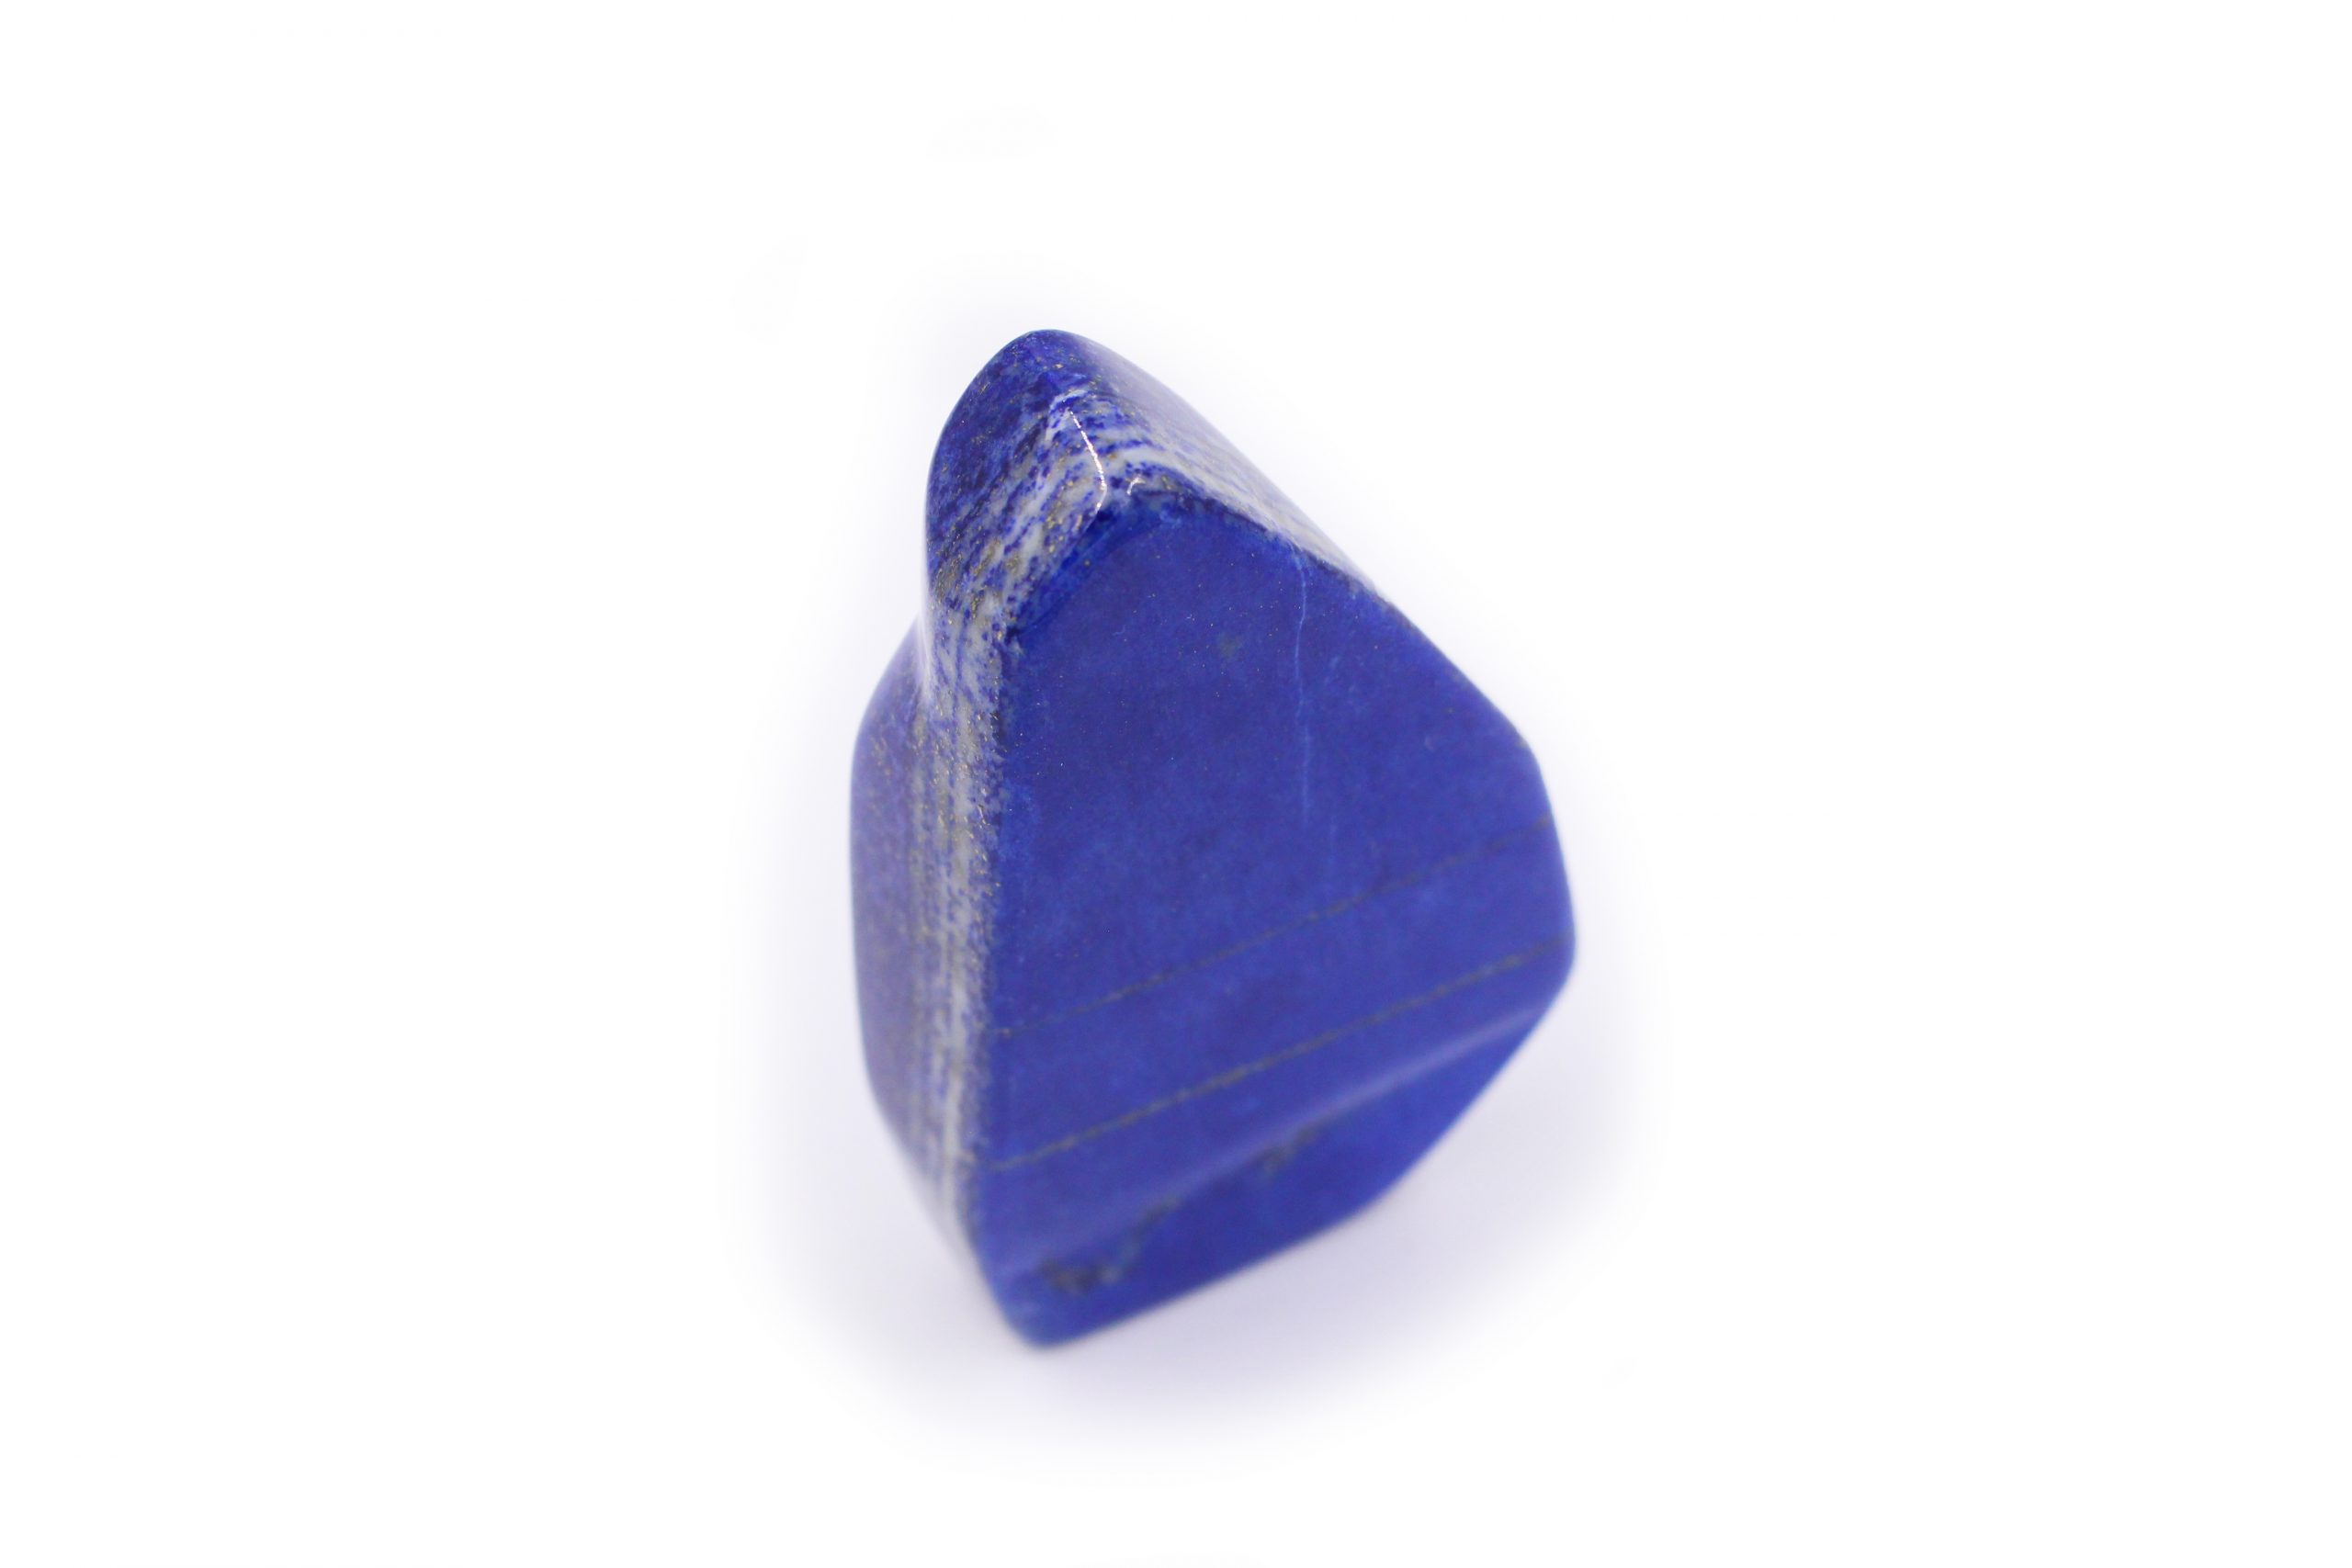 Lapis Lazuli Free Form Polished Pieces - Crystal Dreams